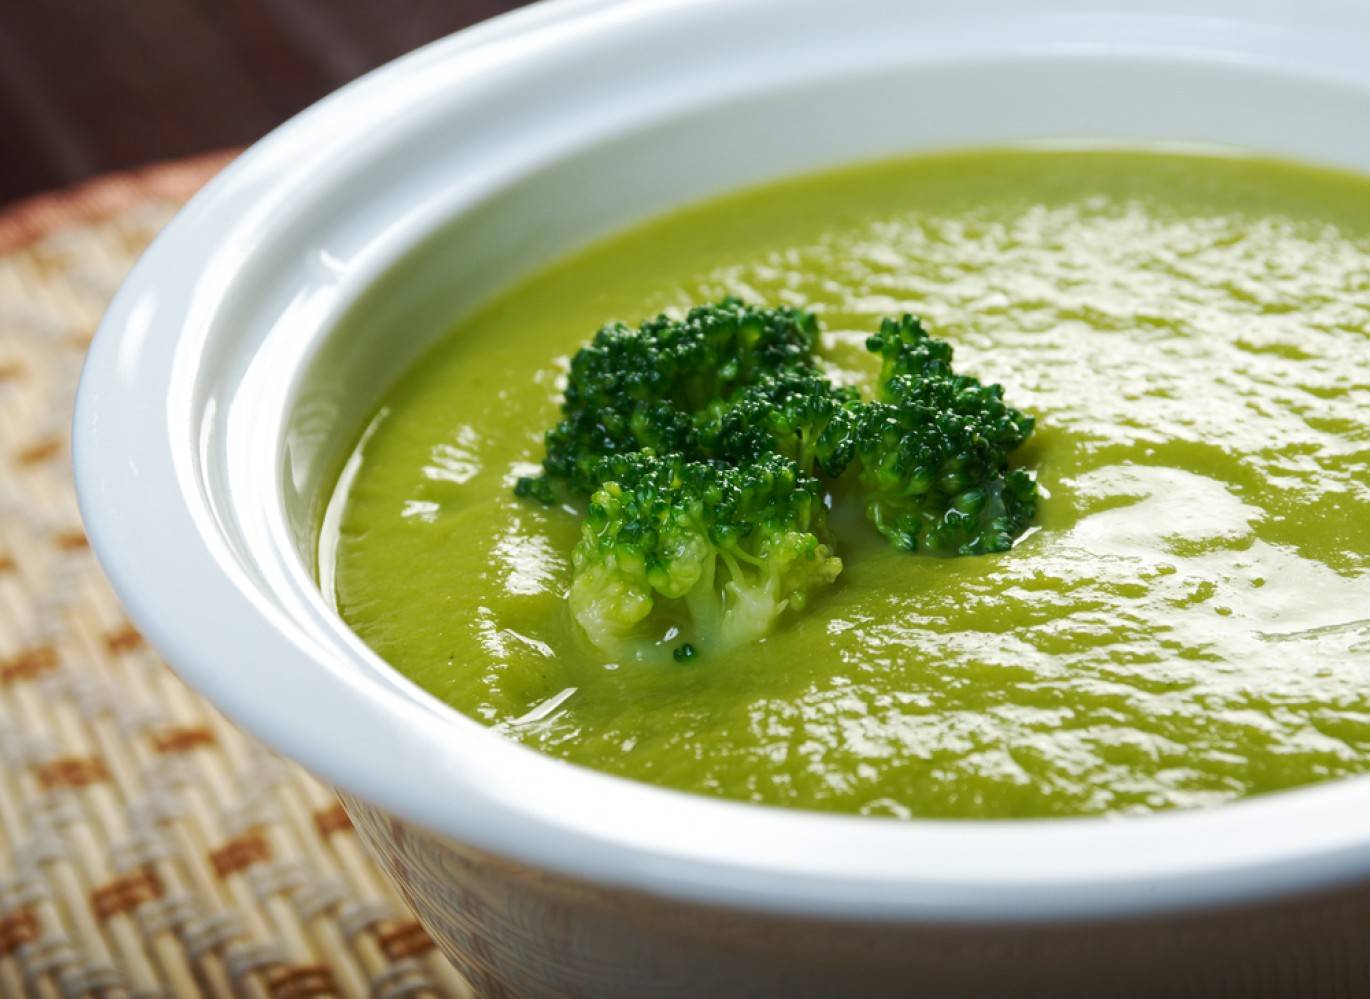 Broccoli soup recipe - Reader's Digest